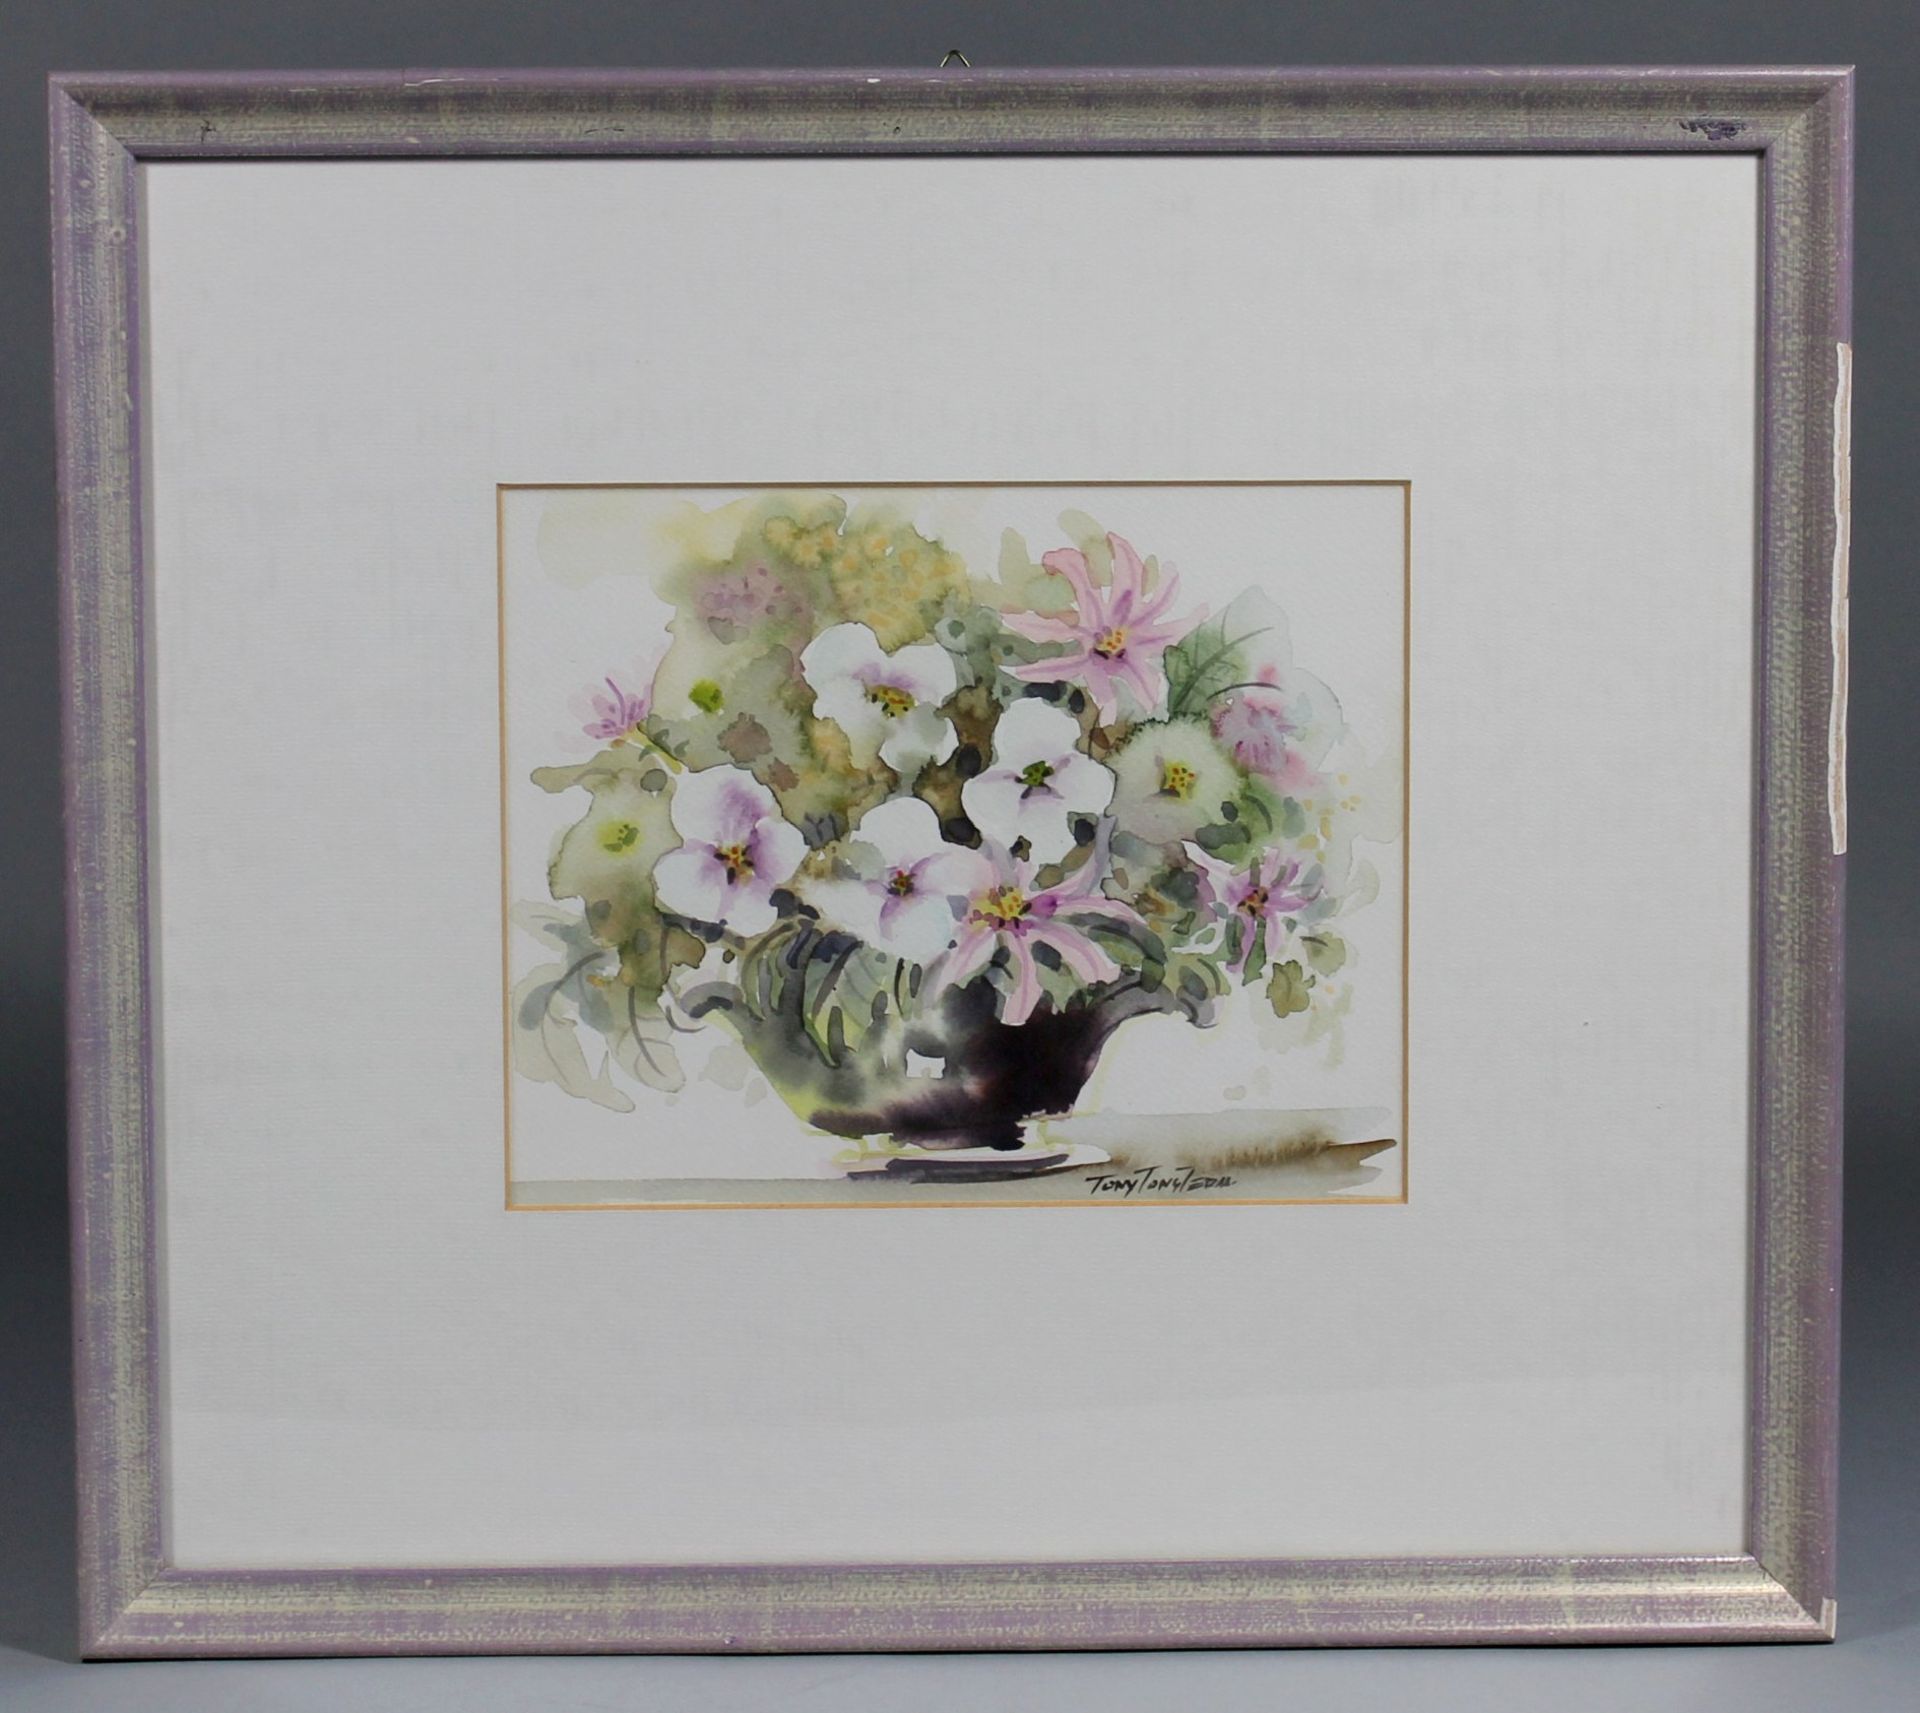 1 Aquarell gerahmt "Blumenvase", rechts unten signiert T. Tongterm, Tony Tongterm (1940), ca. 20cm x